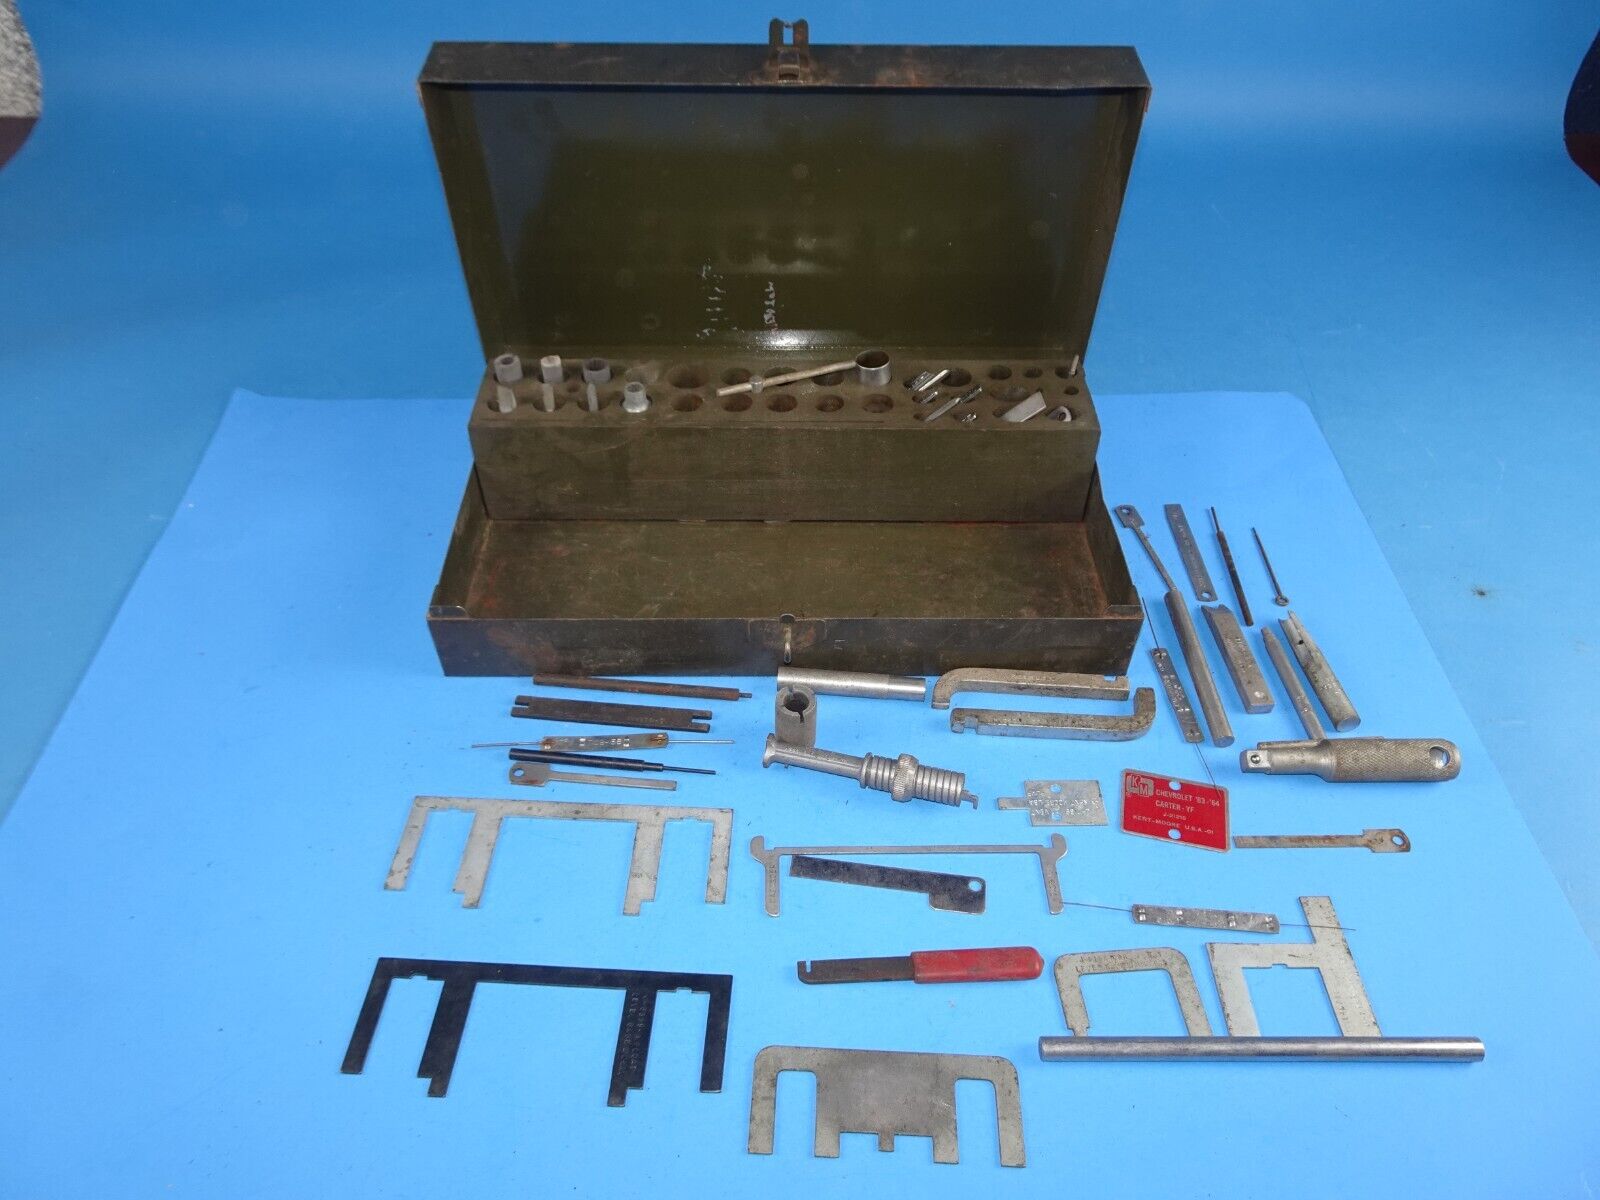 Vintage Carter carburetor tool kit with vintage tools Metal box. Extra tools